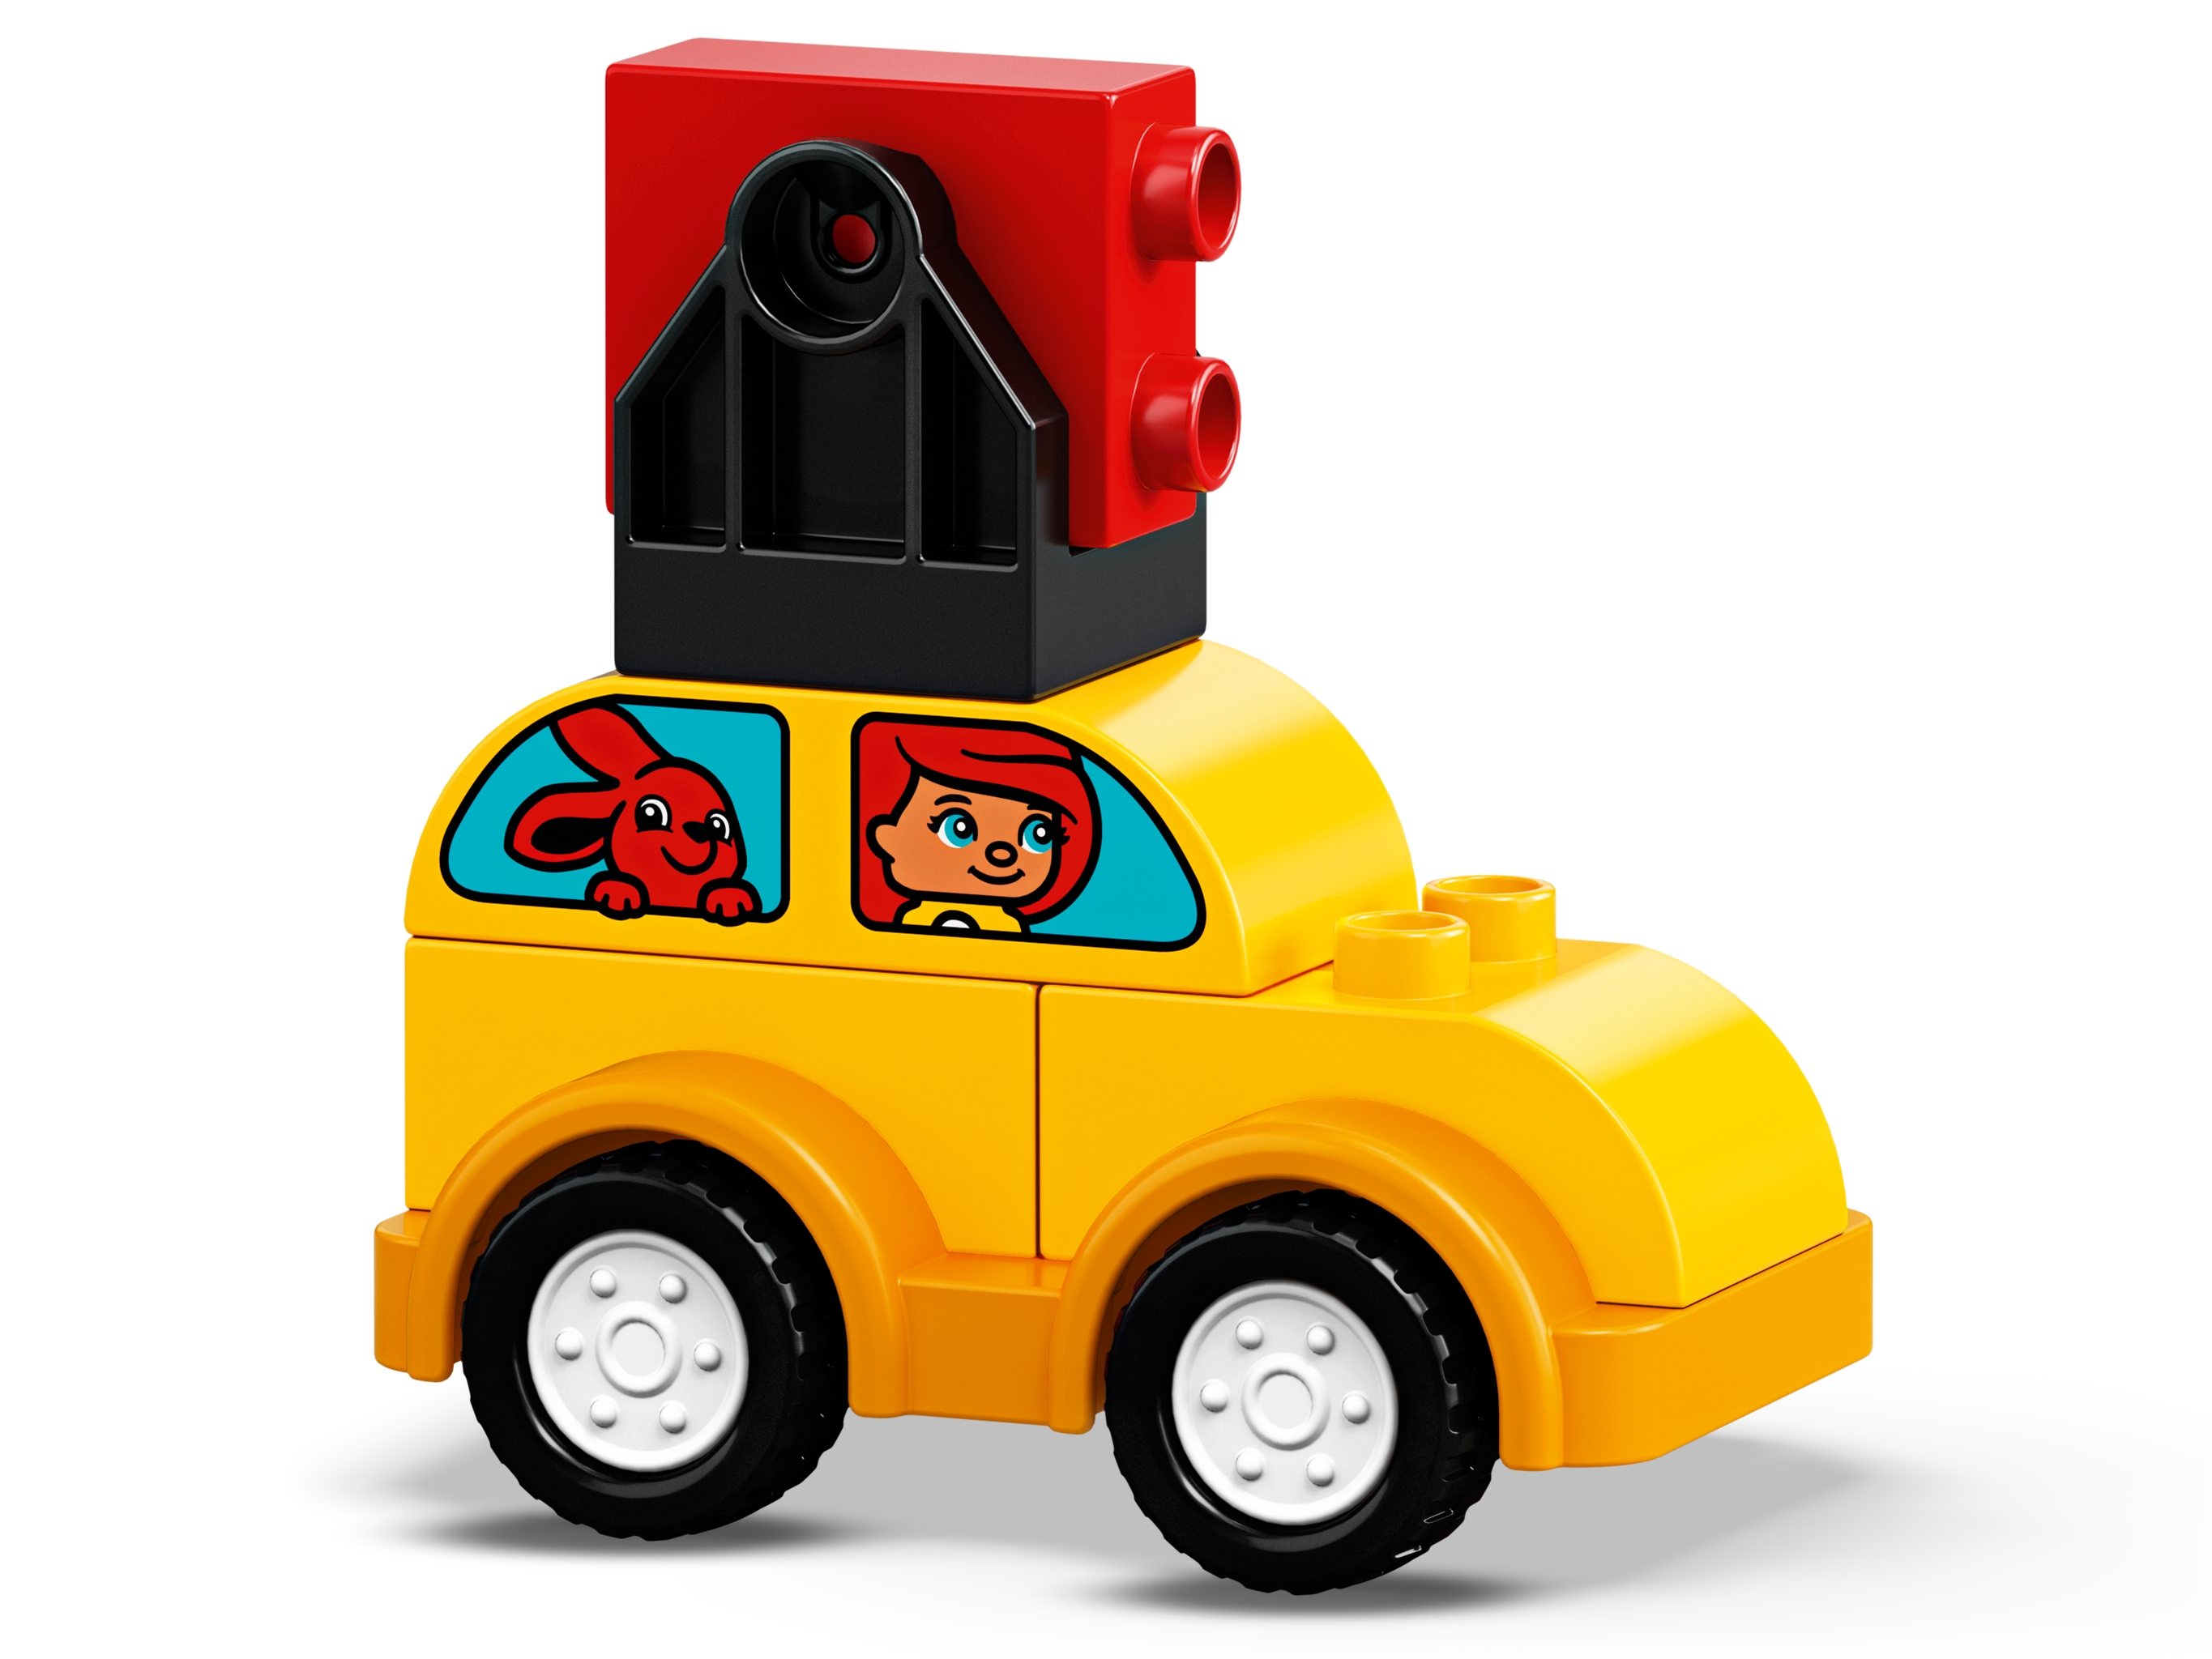 My First LEGO DUPLO Vehicle Set